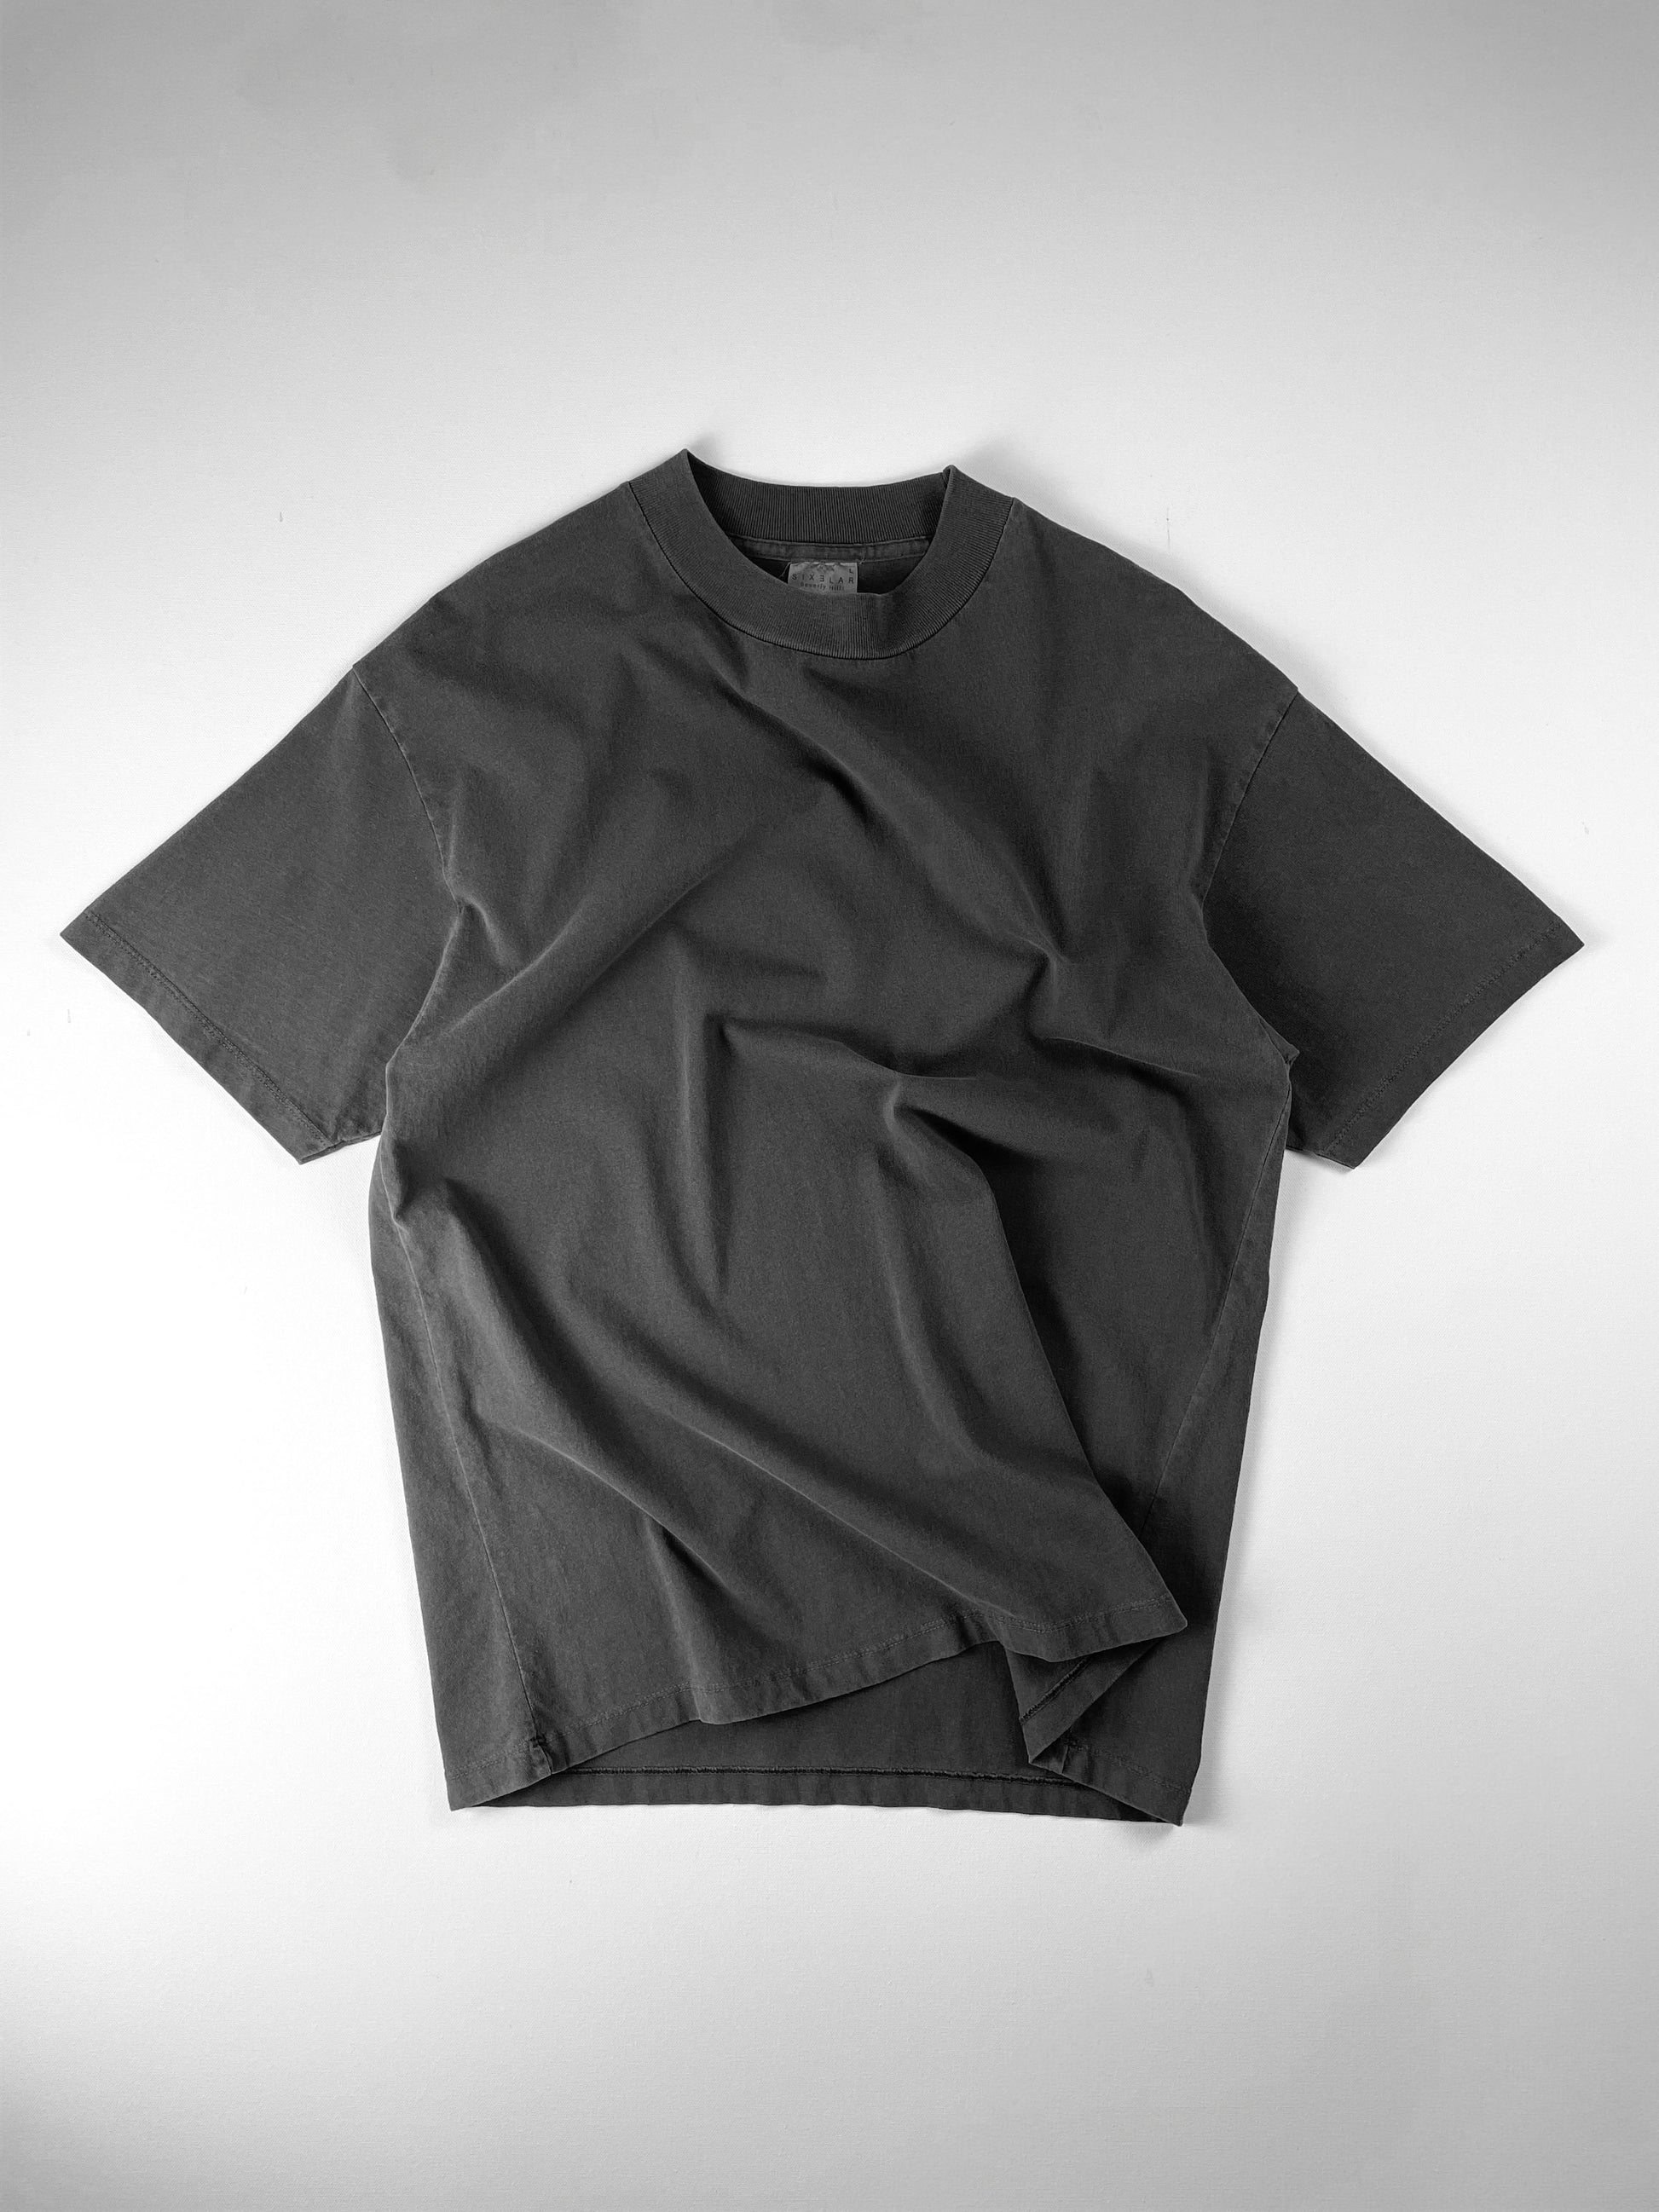 Sixelar Vintage Charcoal t-shirt blank v4.0 flat2